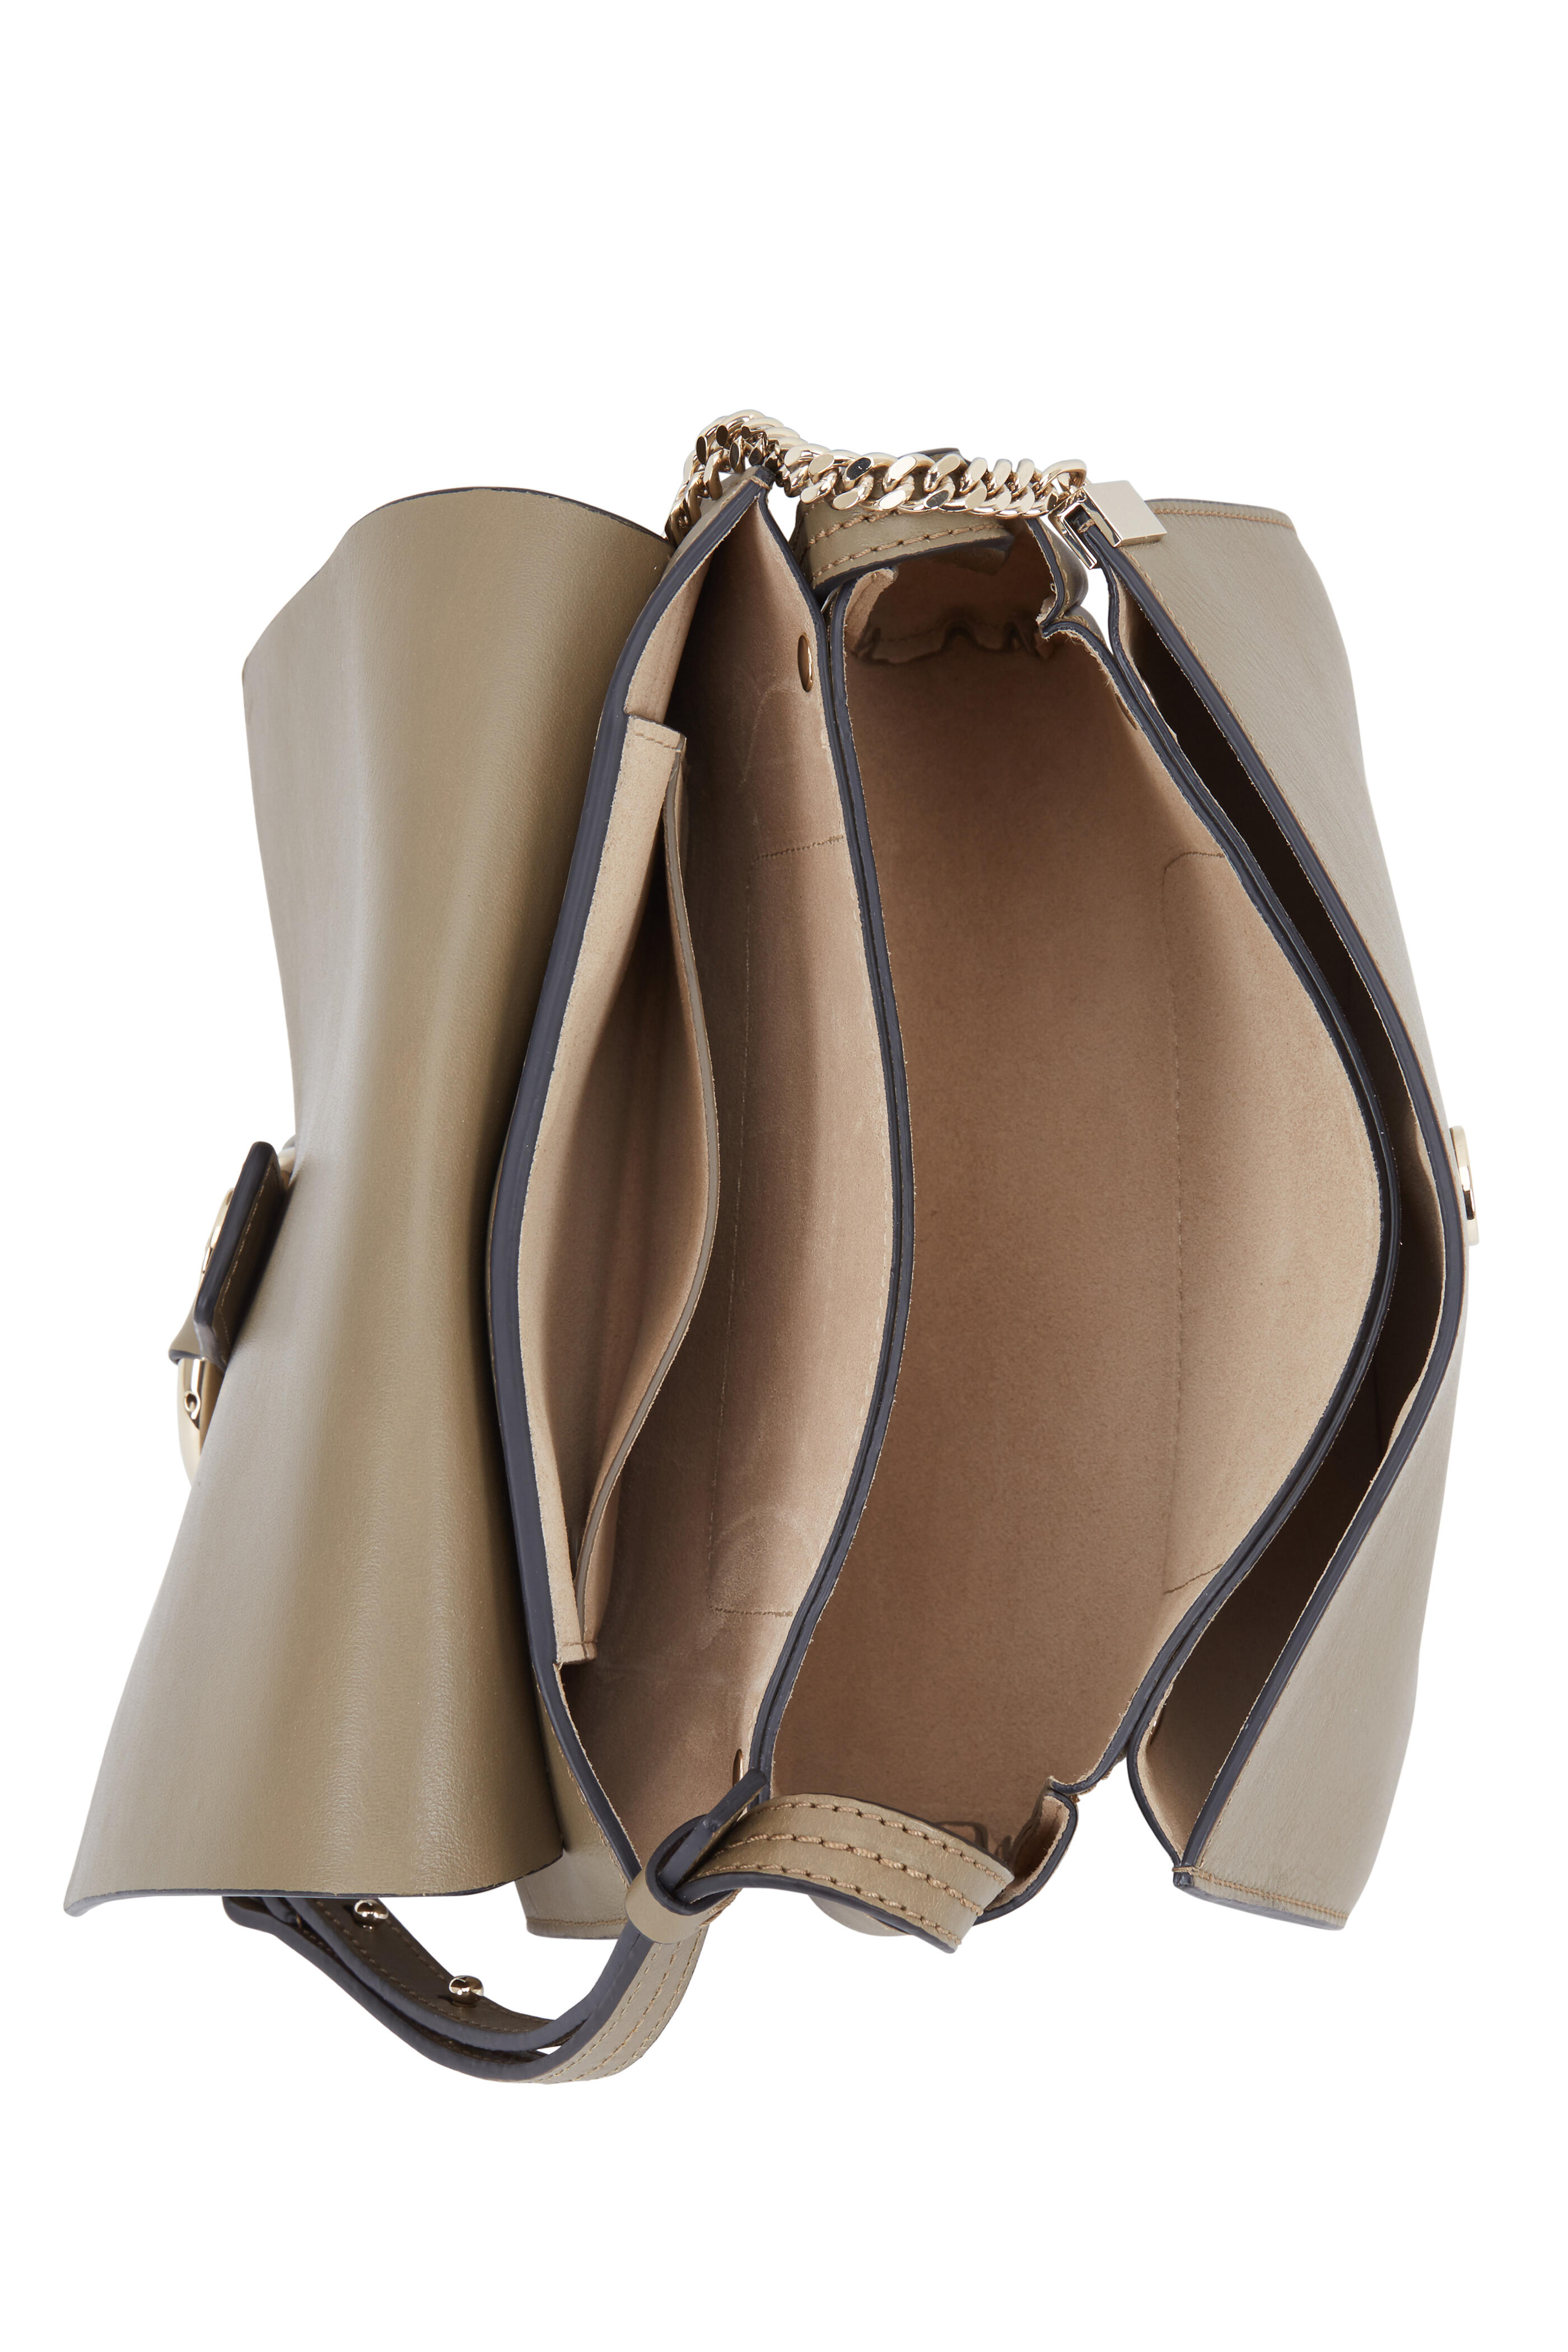 Chloé Faye Day Leather Handbag